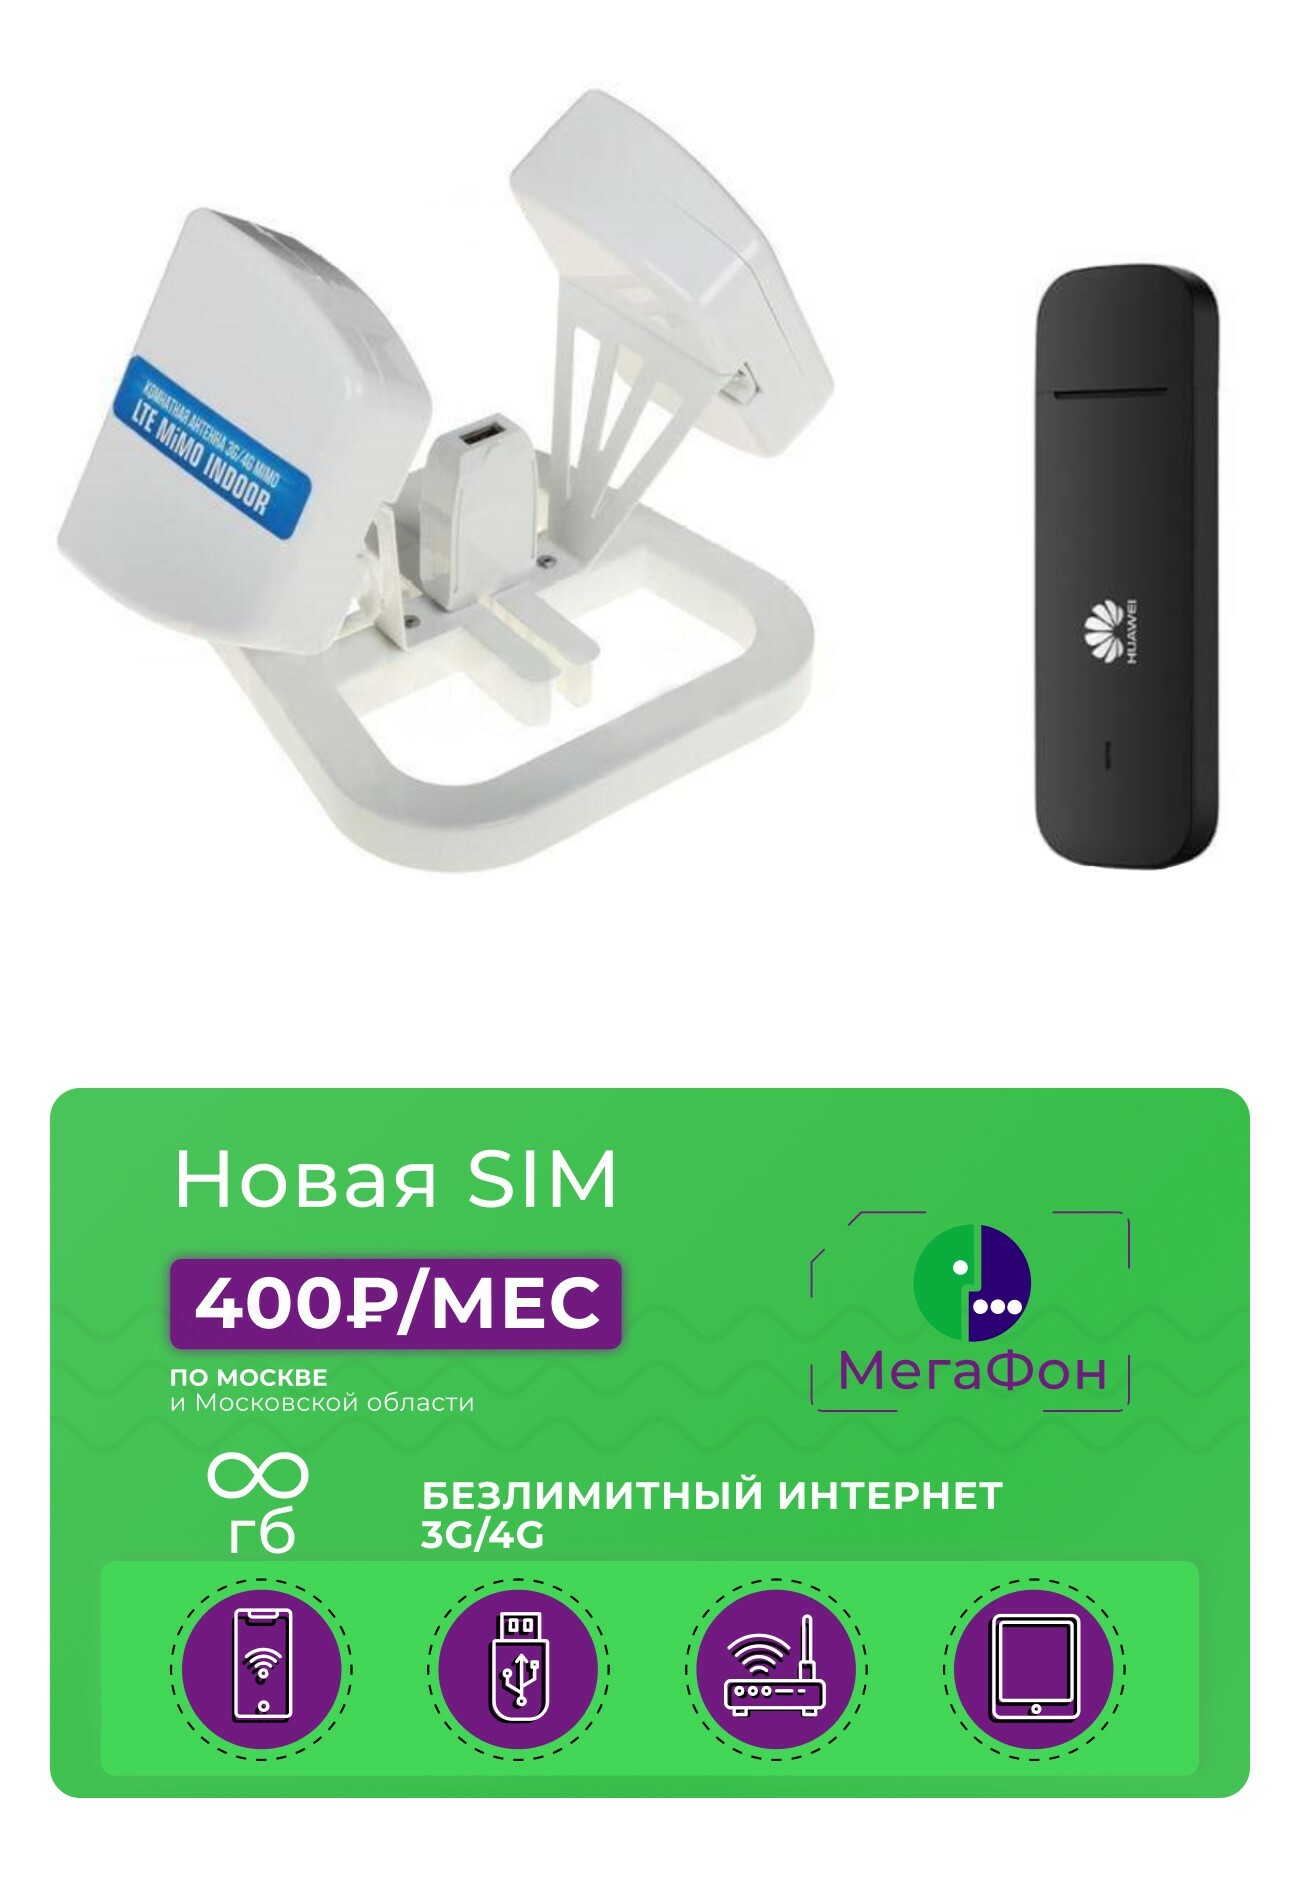 Усилители сигнала GSM/3G/4G/LTE Мегафон | aikimaster.ru